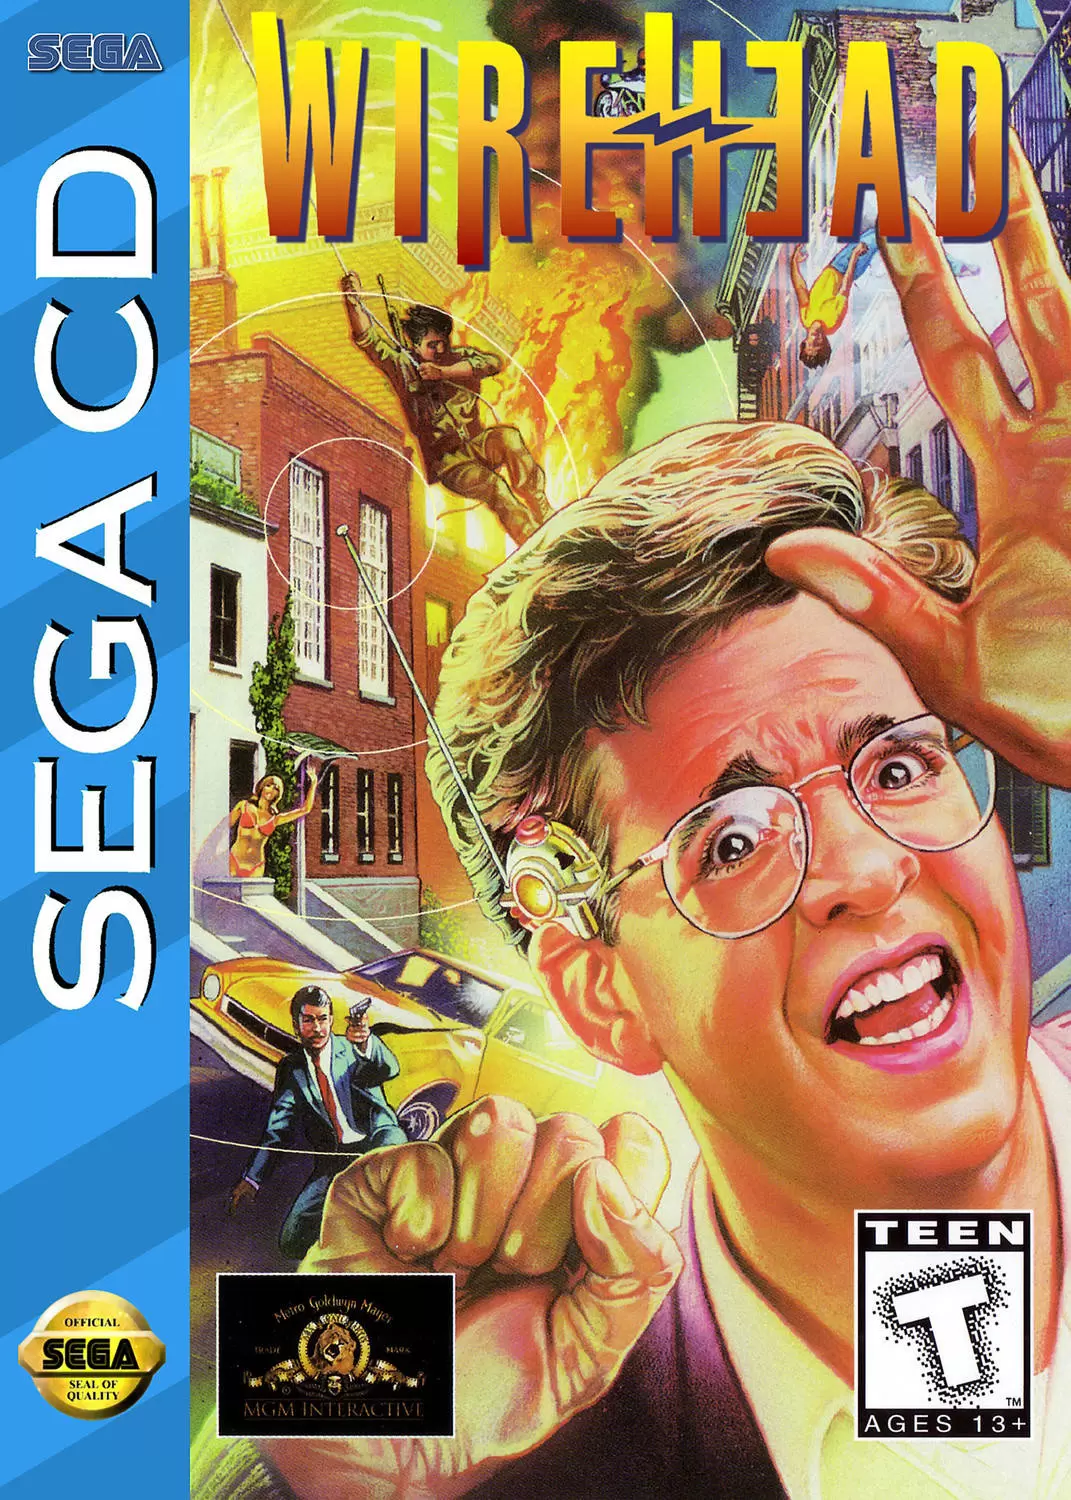 SEGA Mega CD Games - Wirehead